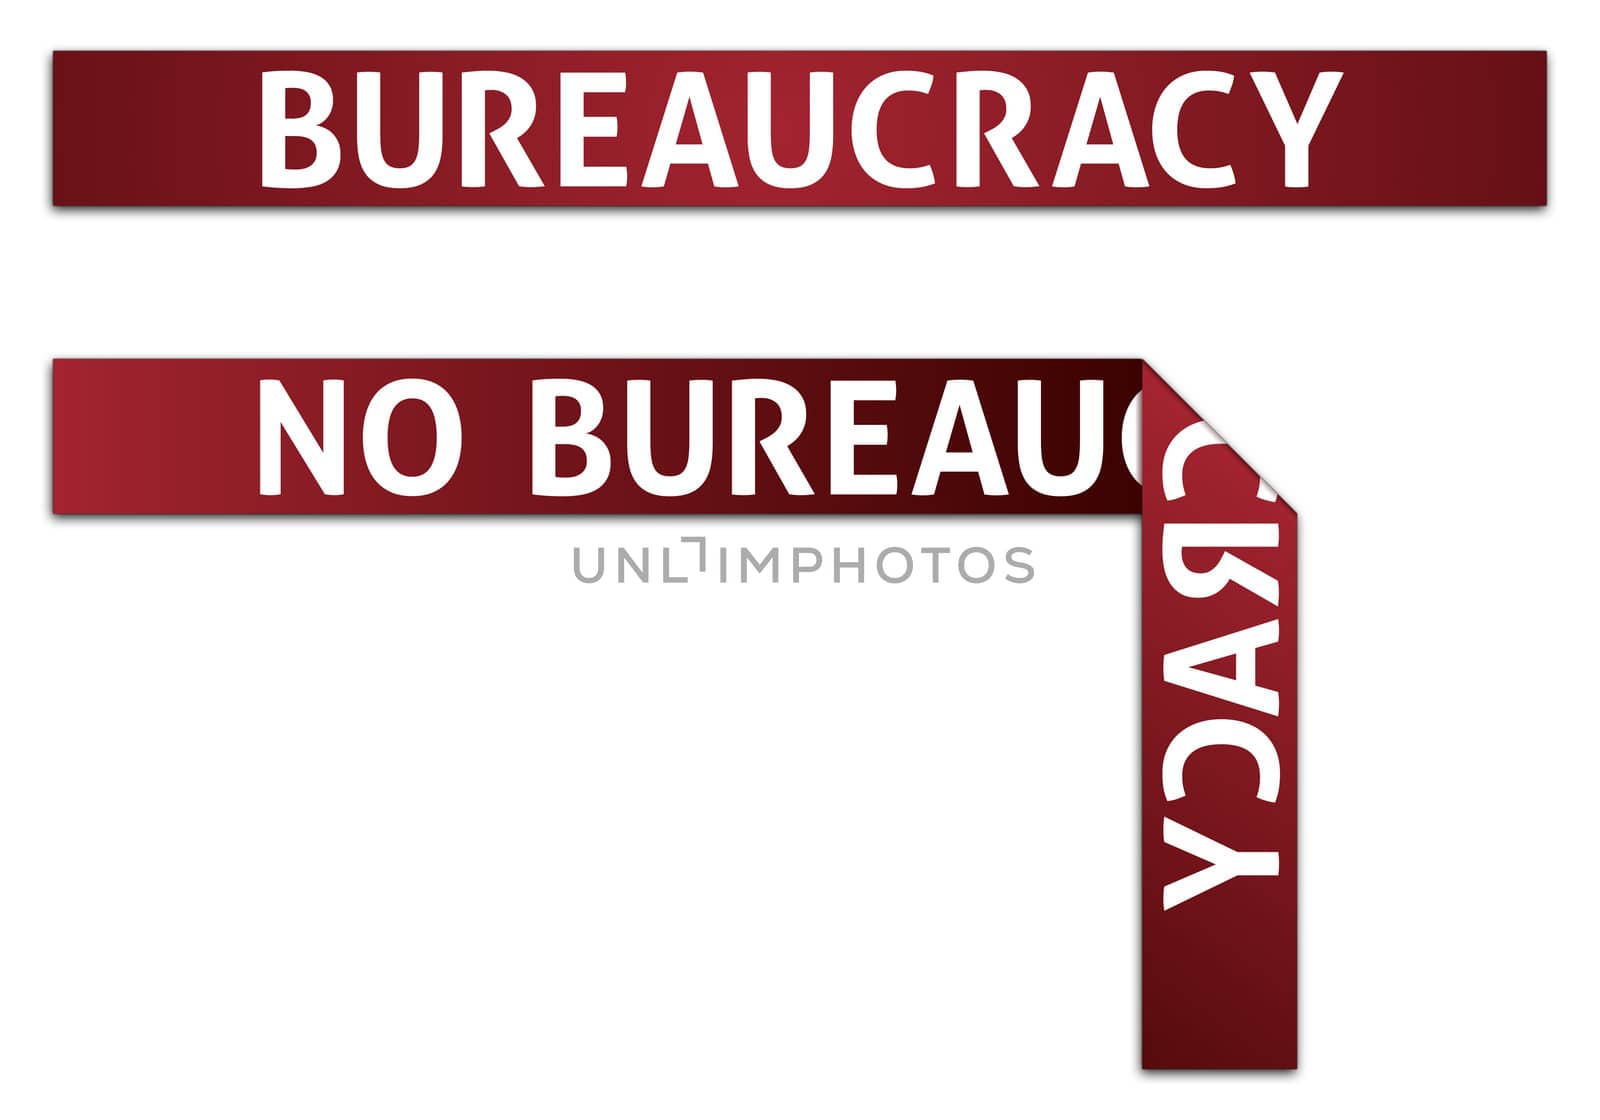 Bureaucracy and No Bureaucracy Red Tape Illustrations (eps v.10)